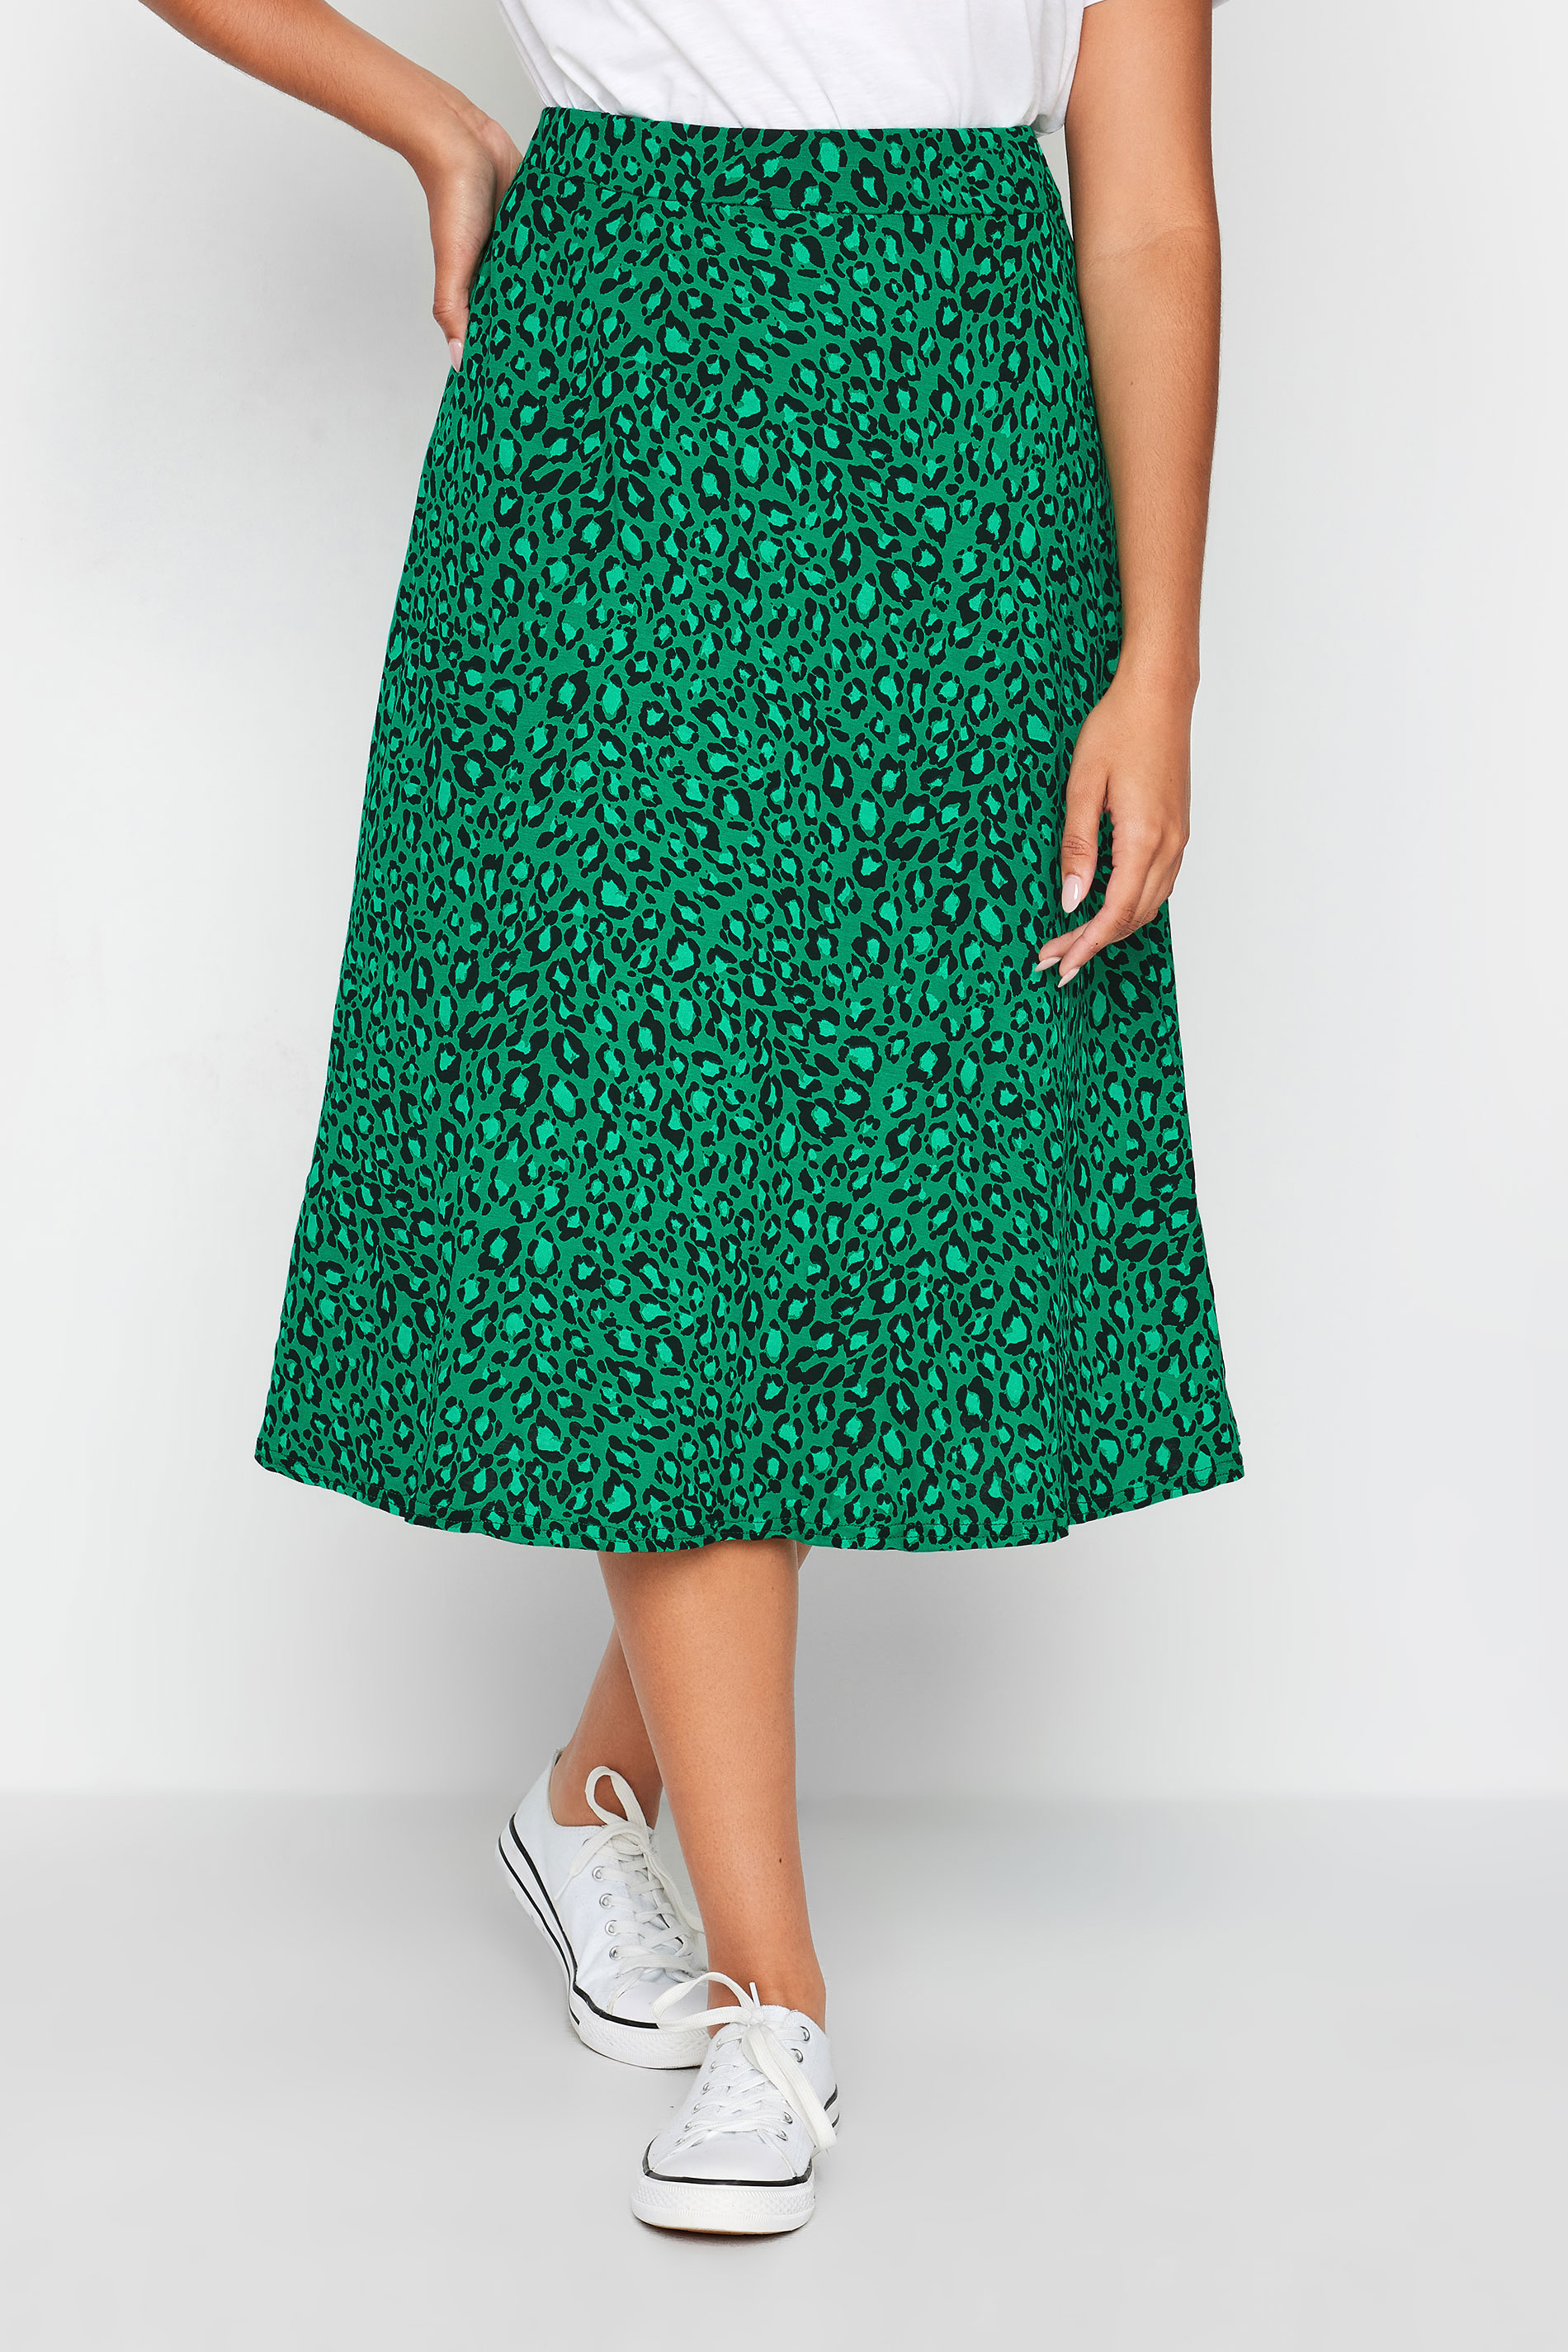 M&Co Green Leopard Print Jersey Midi Skirt | M&Co 1